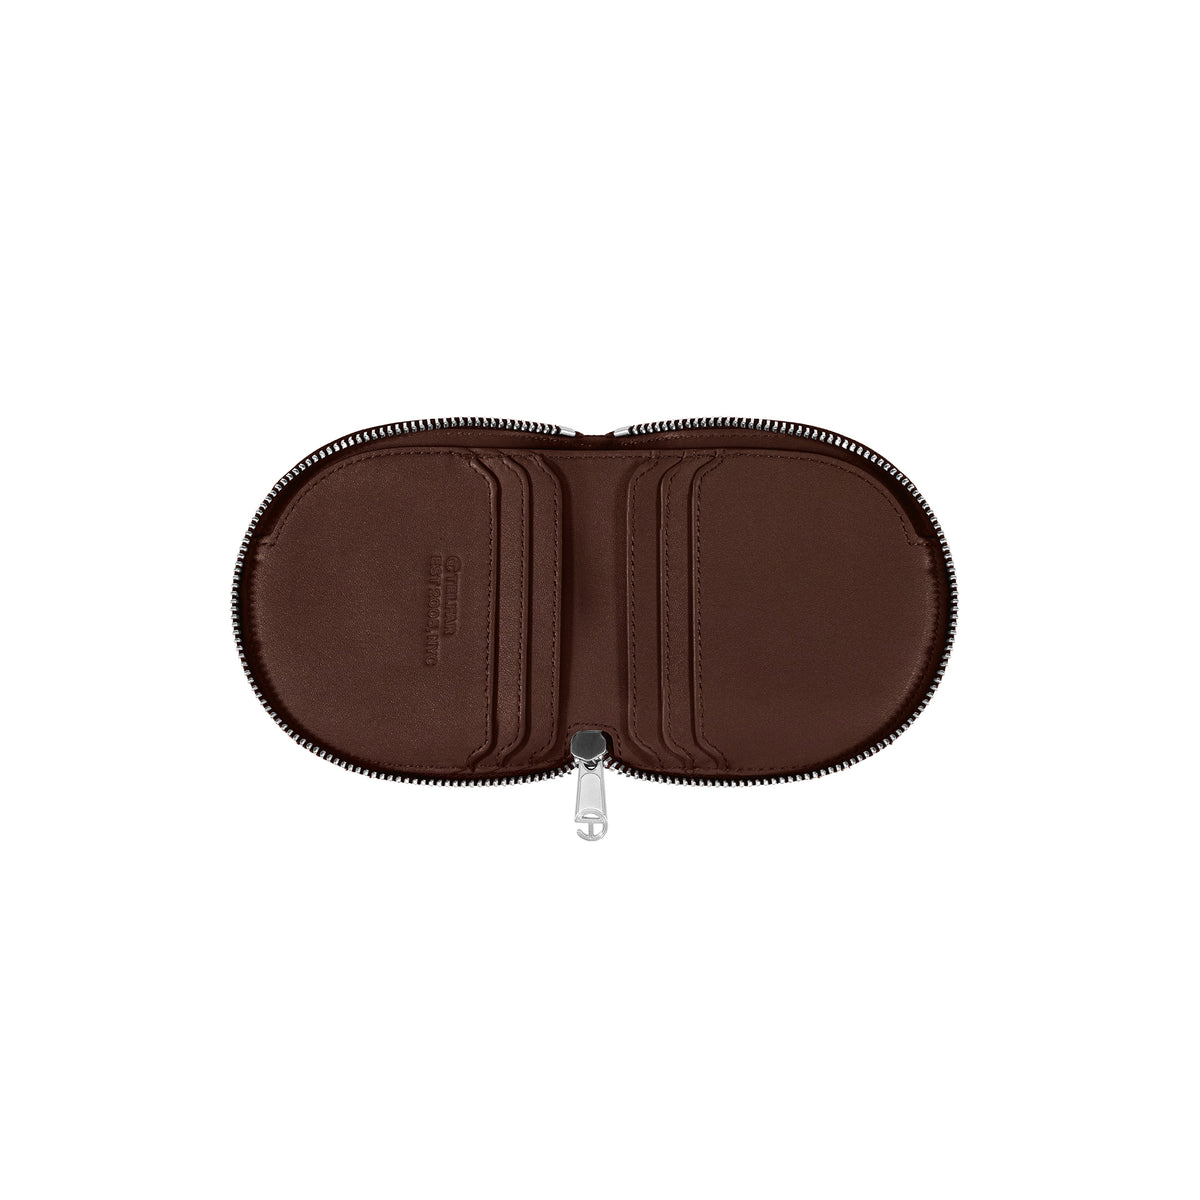 Telfar Wallet - Chocolate